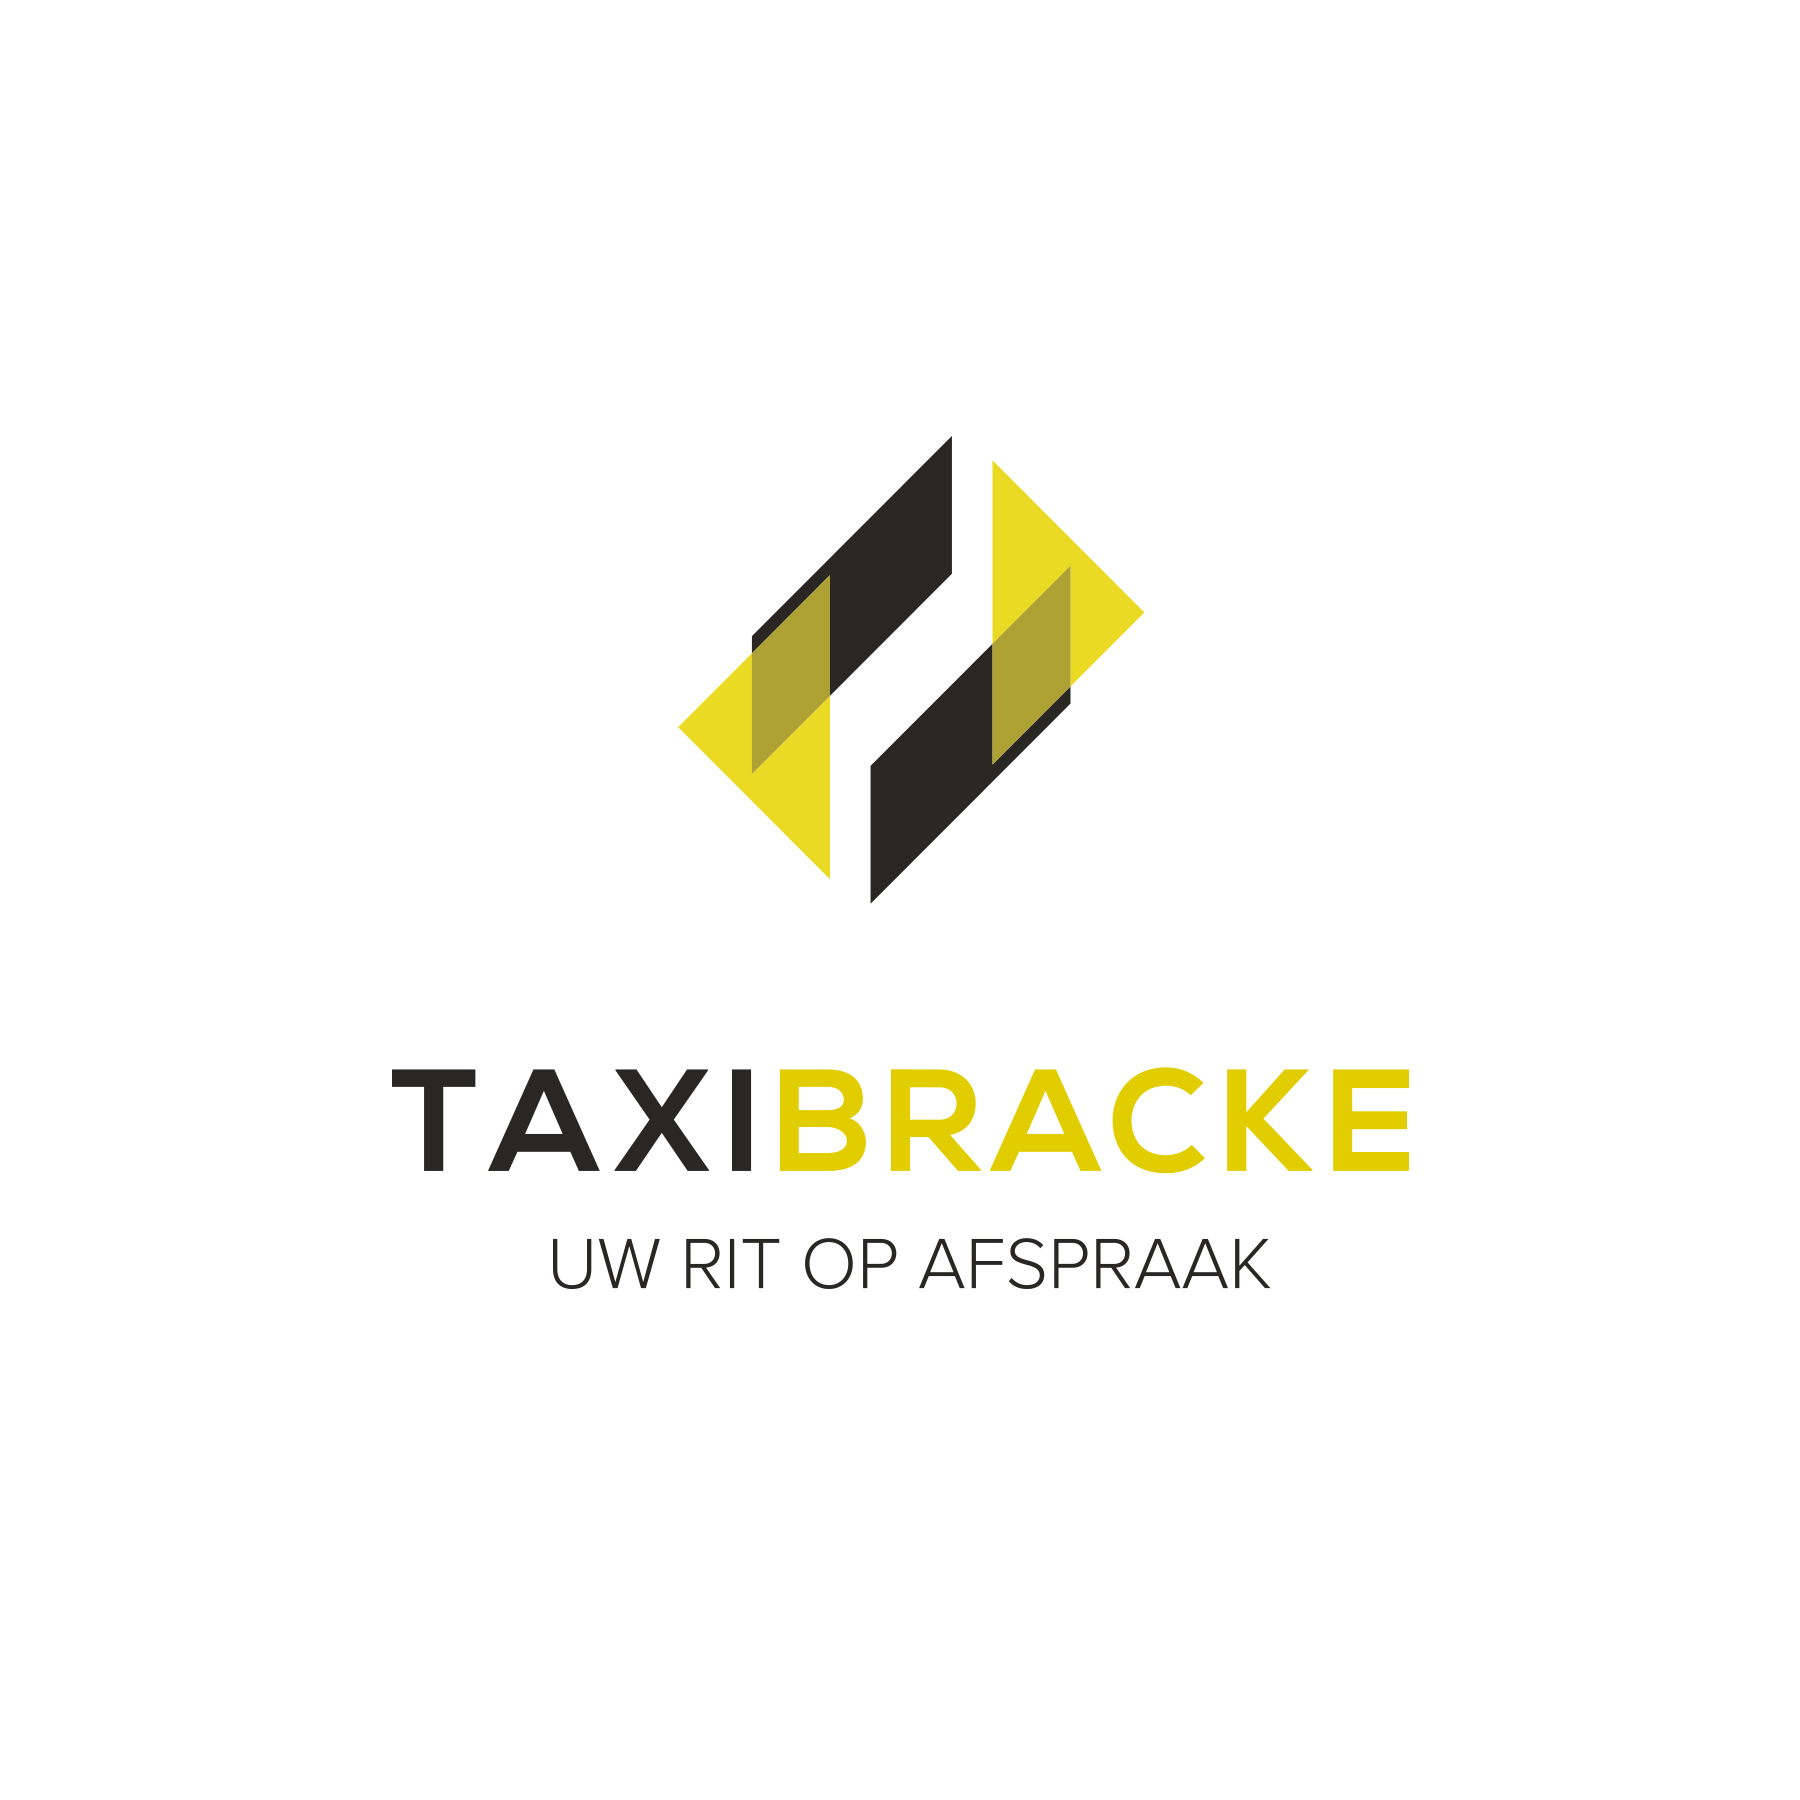 Taxi Bracke